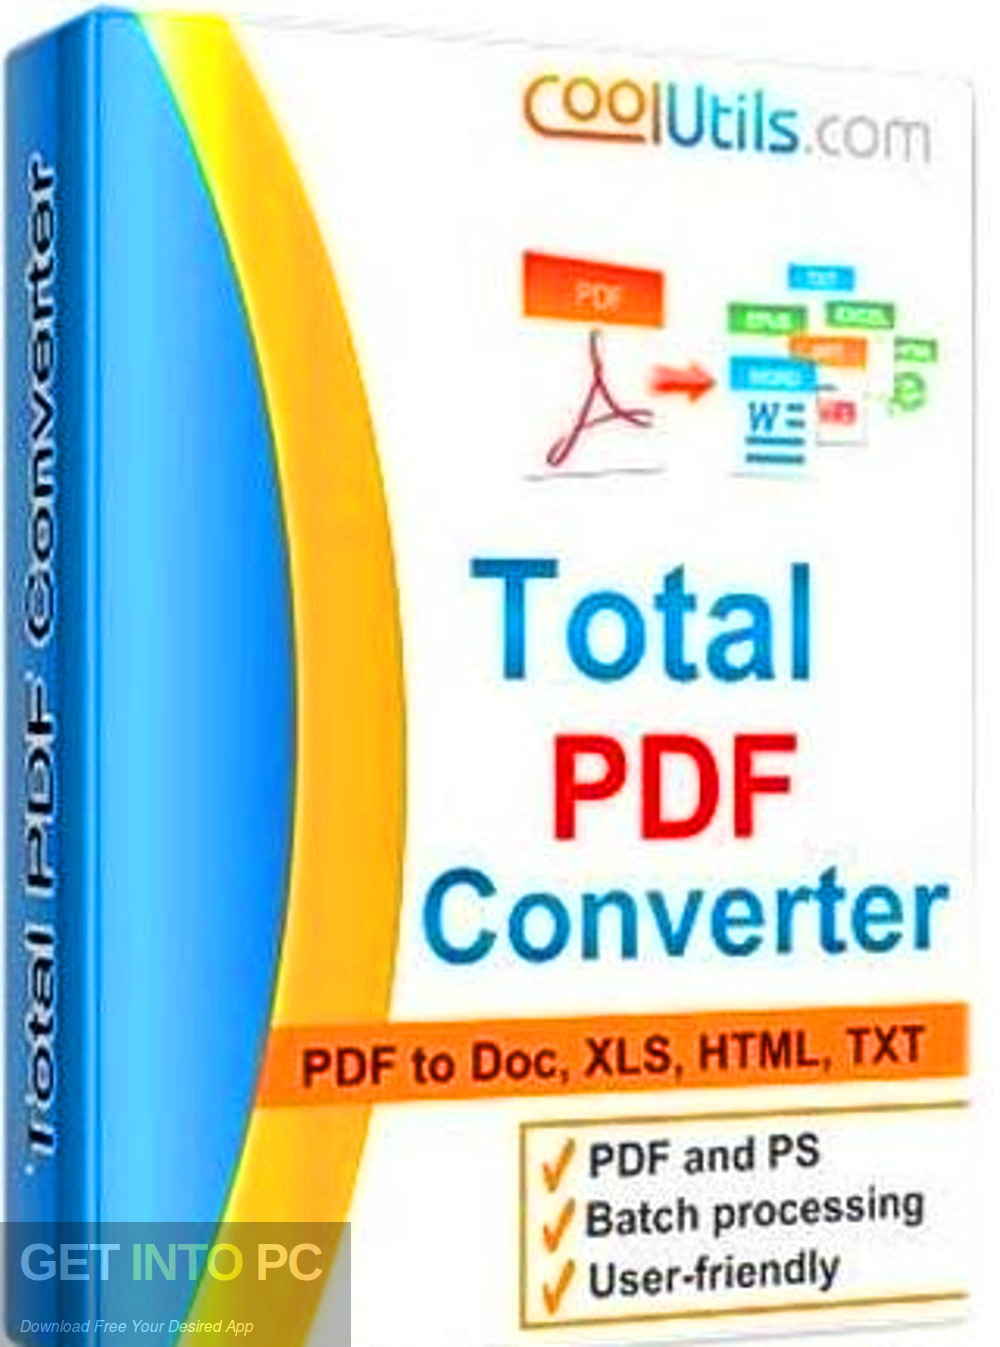 Coolutils Total PDF Converter 2020 Free Download GetintoPC.com